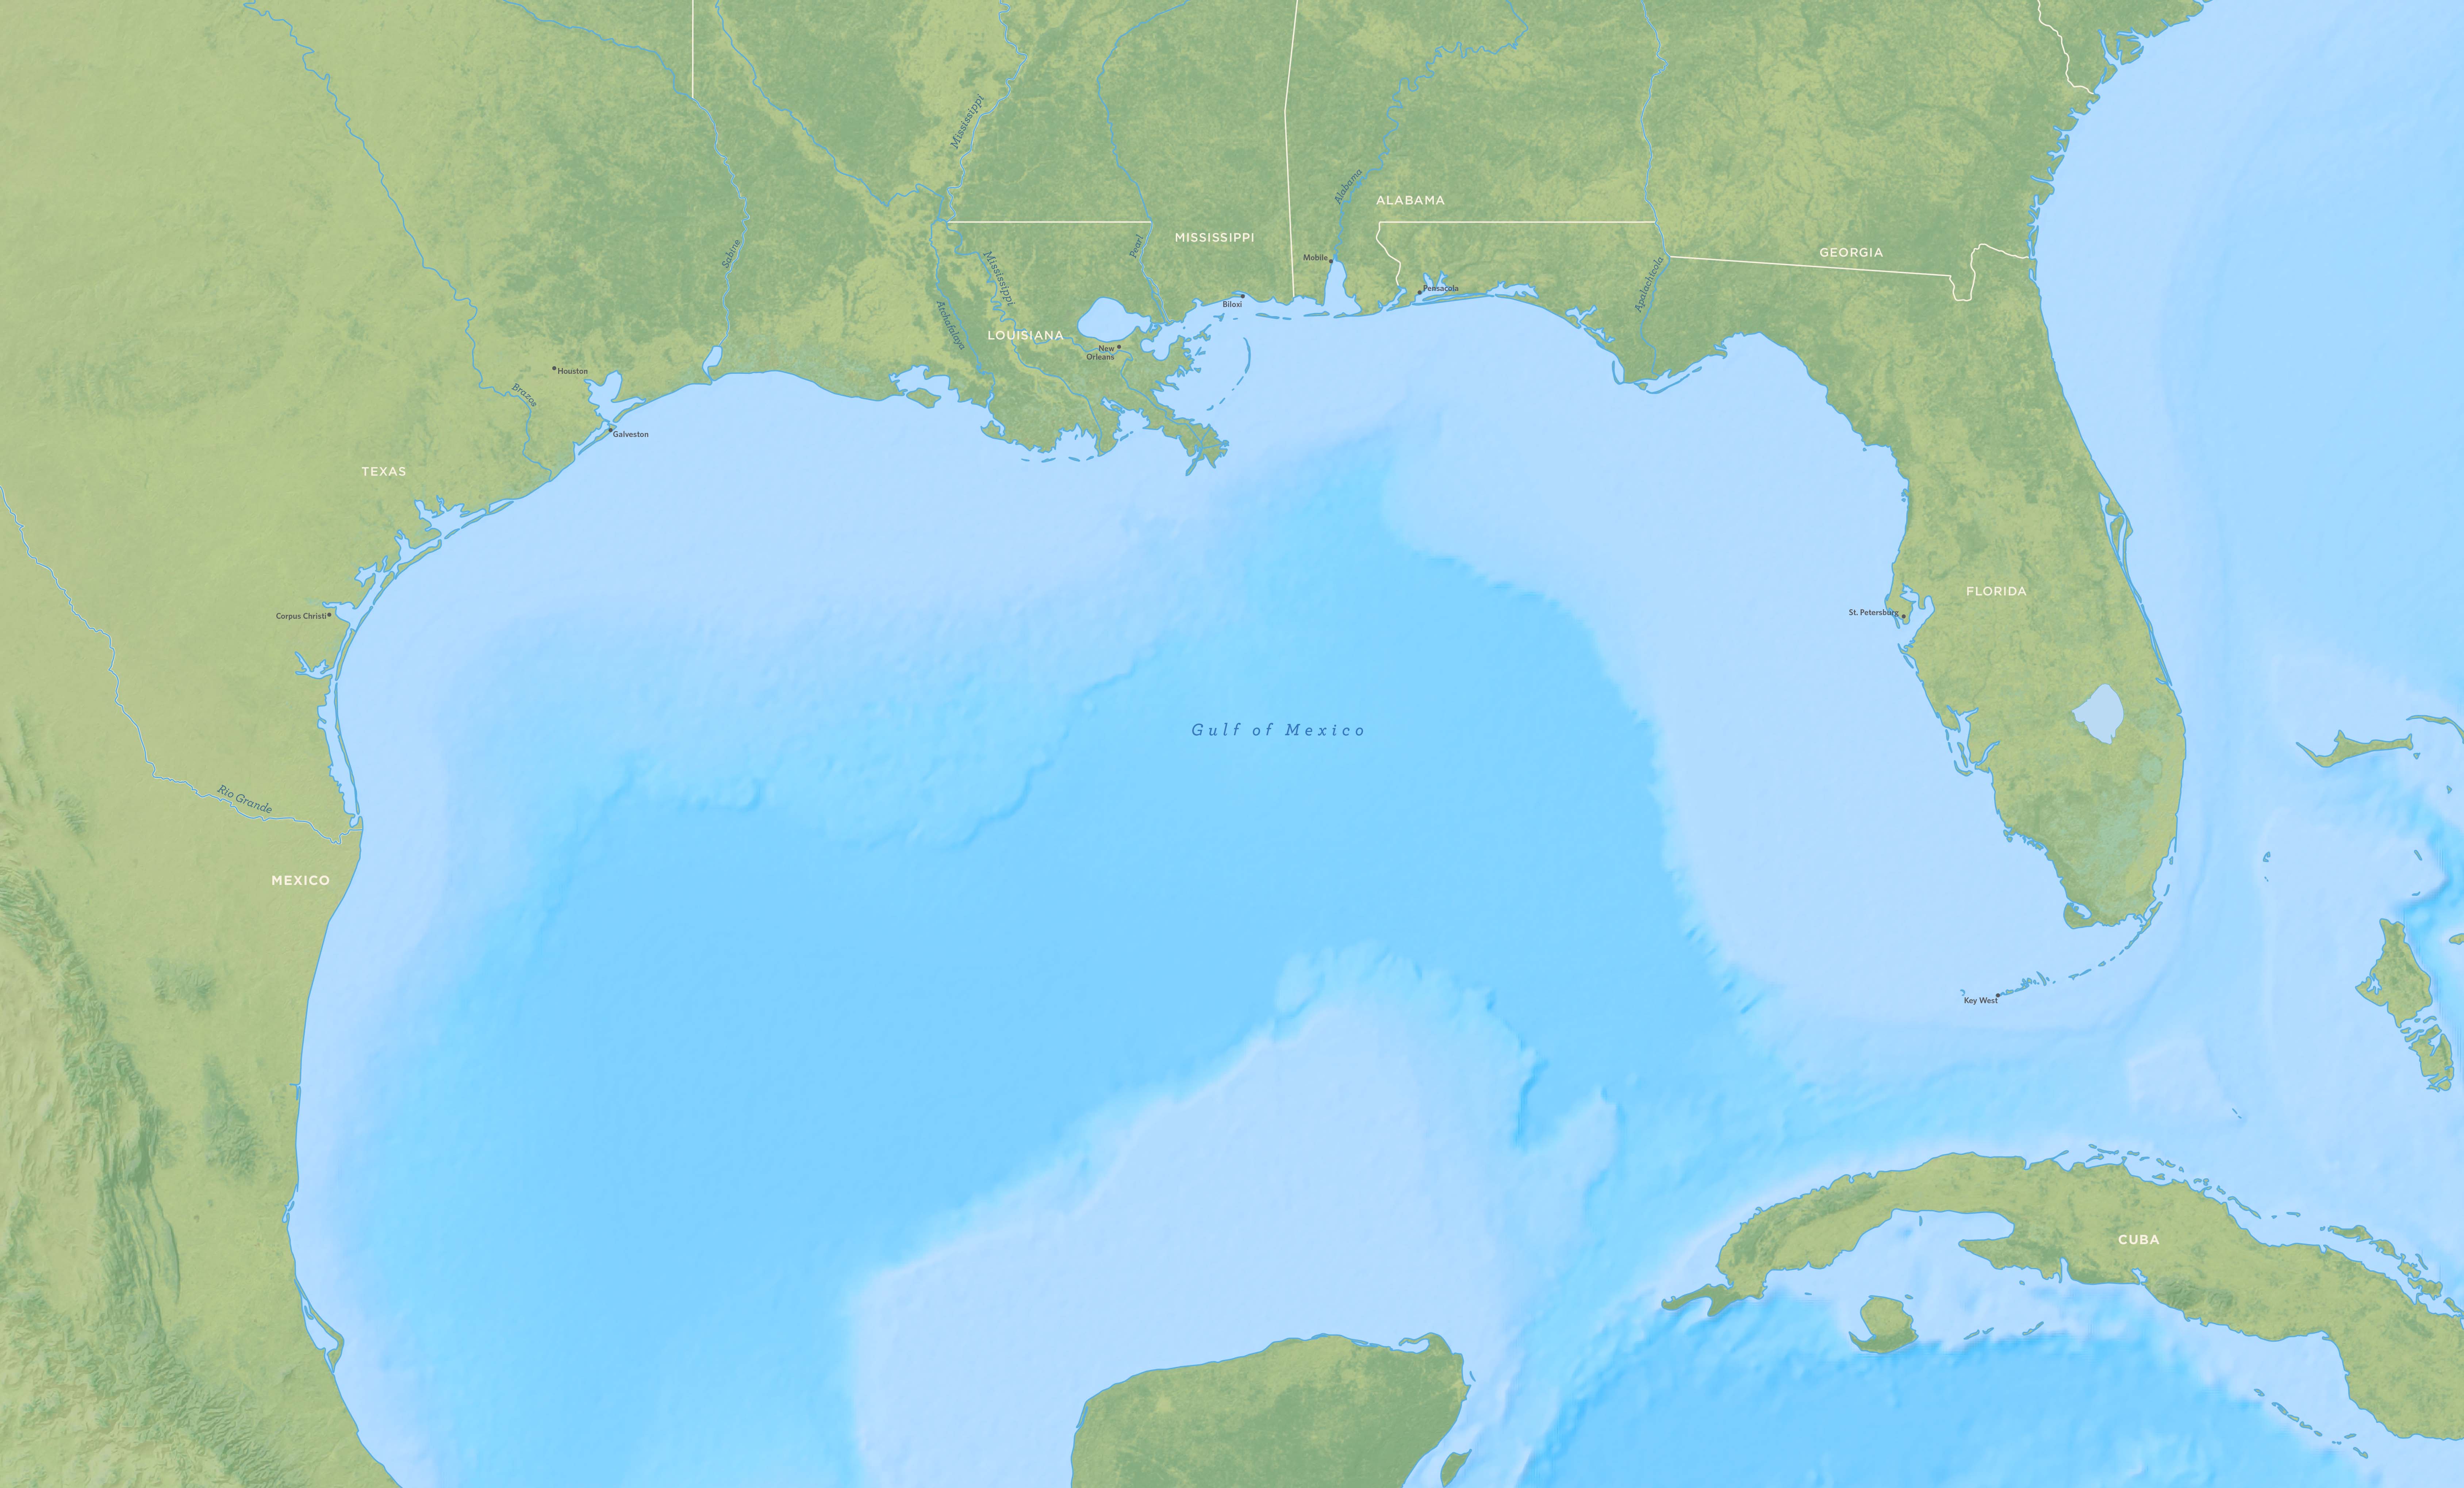 Залив стый смех. Мексиканский залив, Флорида, США. Техас мексиканский залив. Острова мексиканского залива. Заливы на карте.